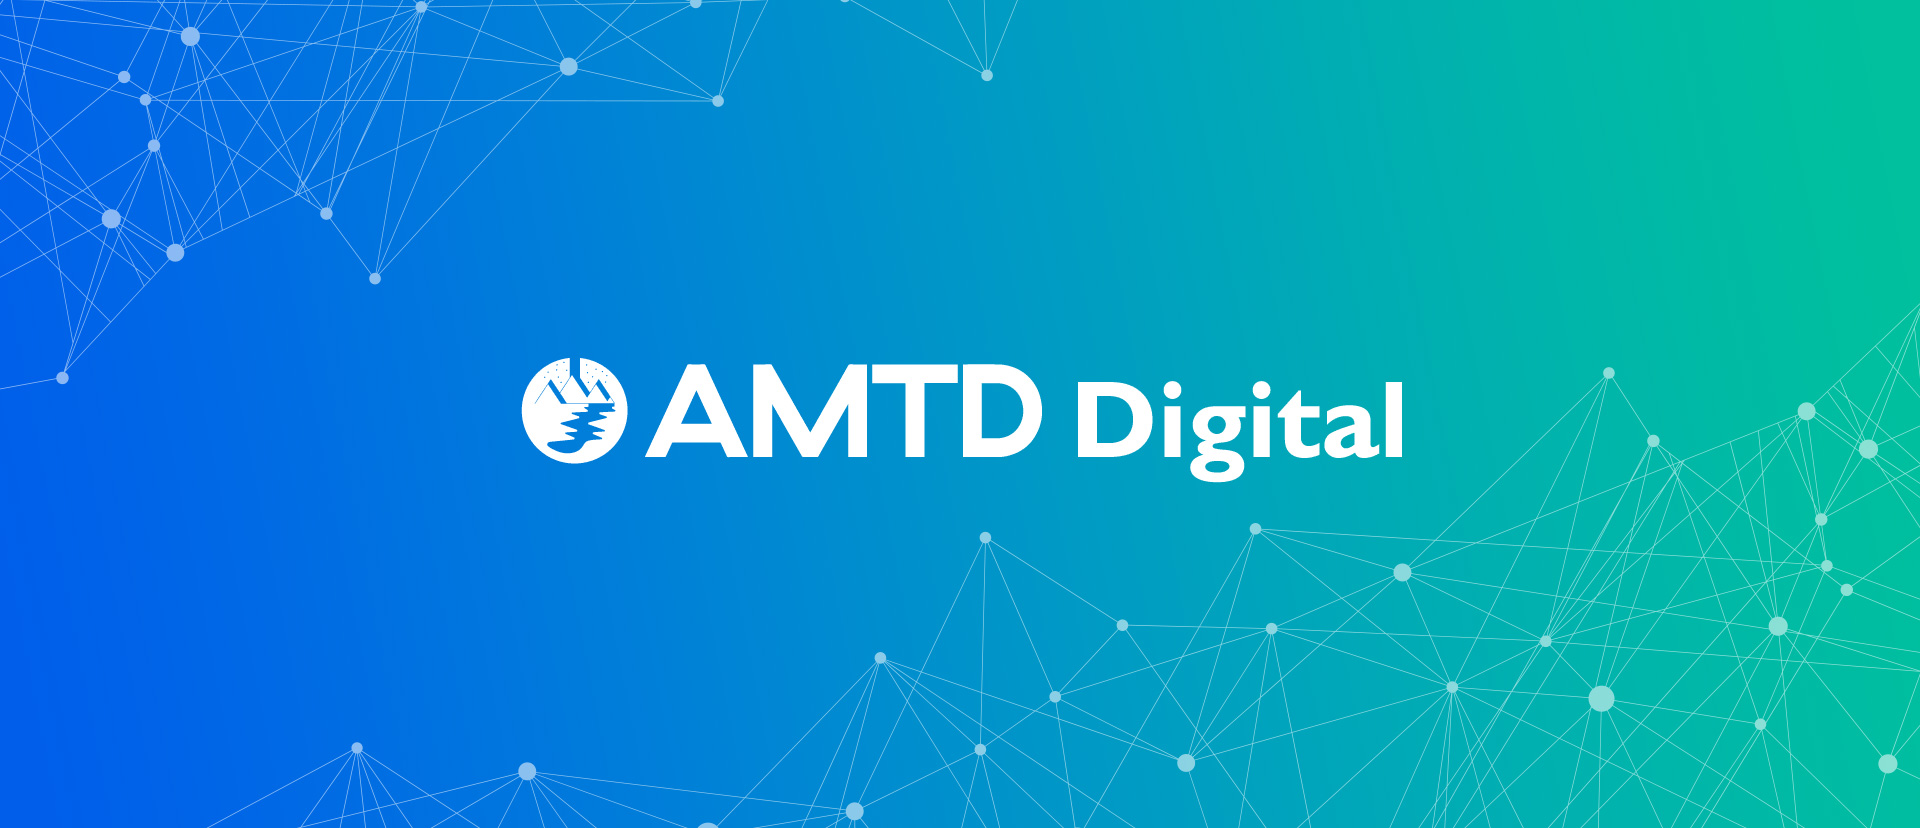 What Made AMTD Digital Stock Grow 19,550%?